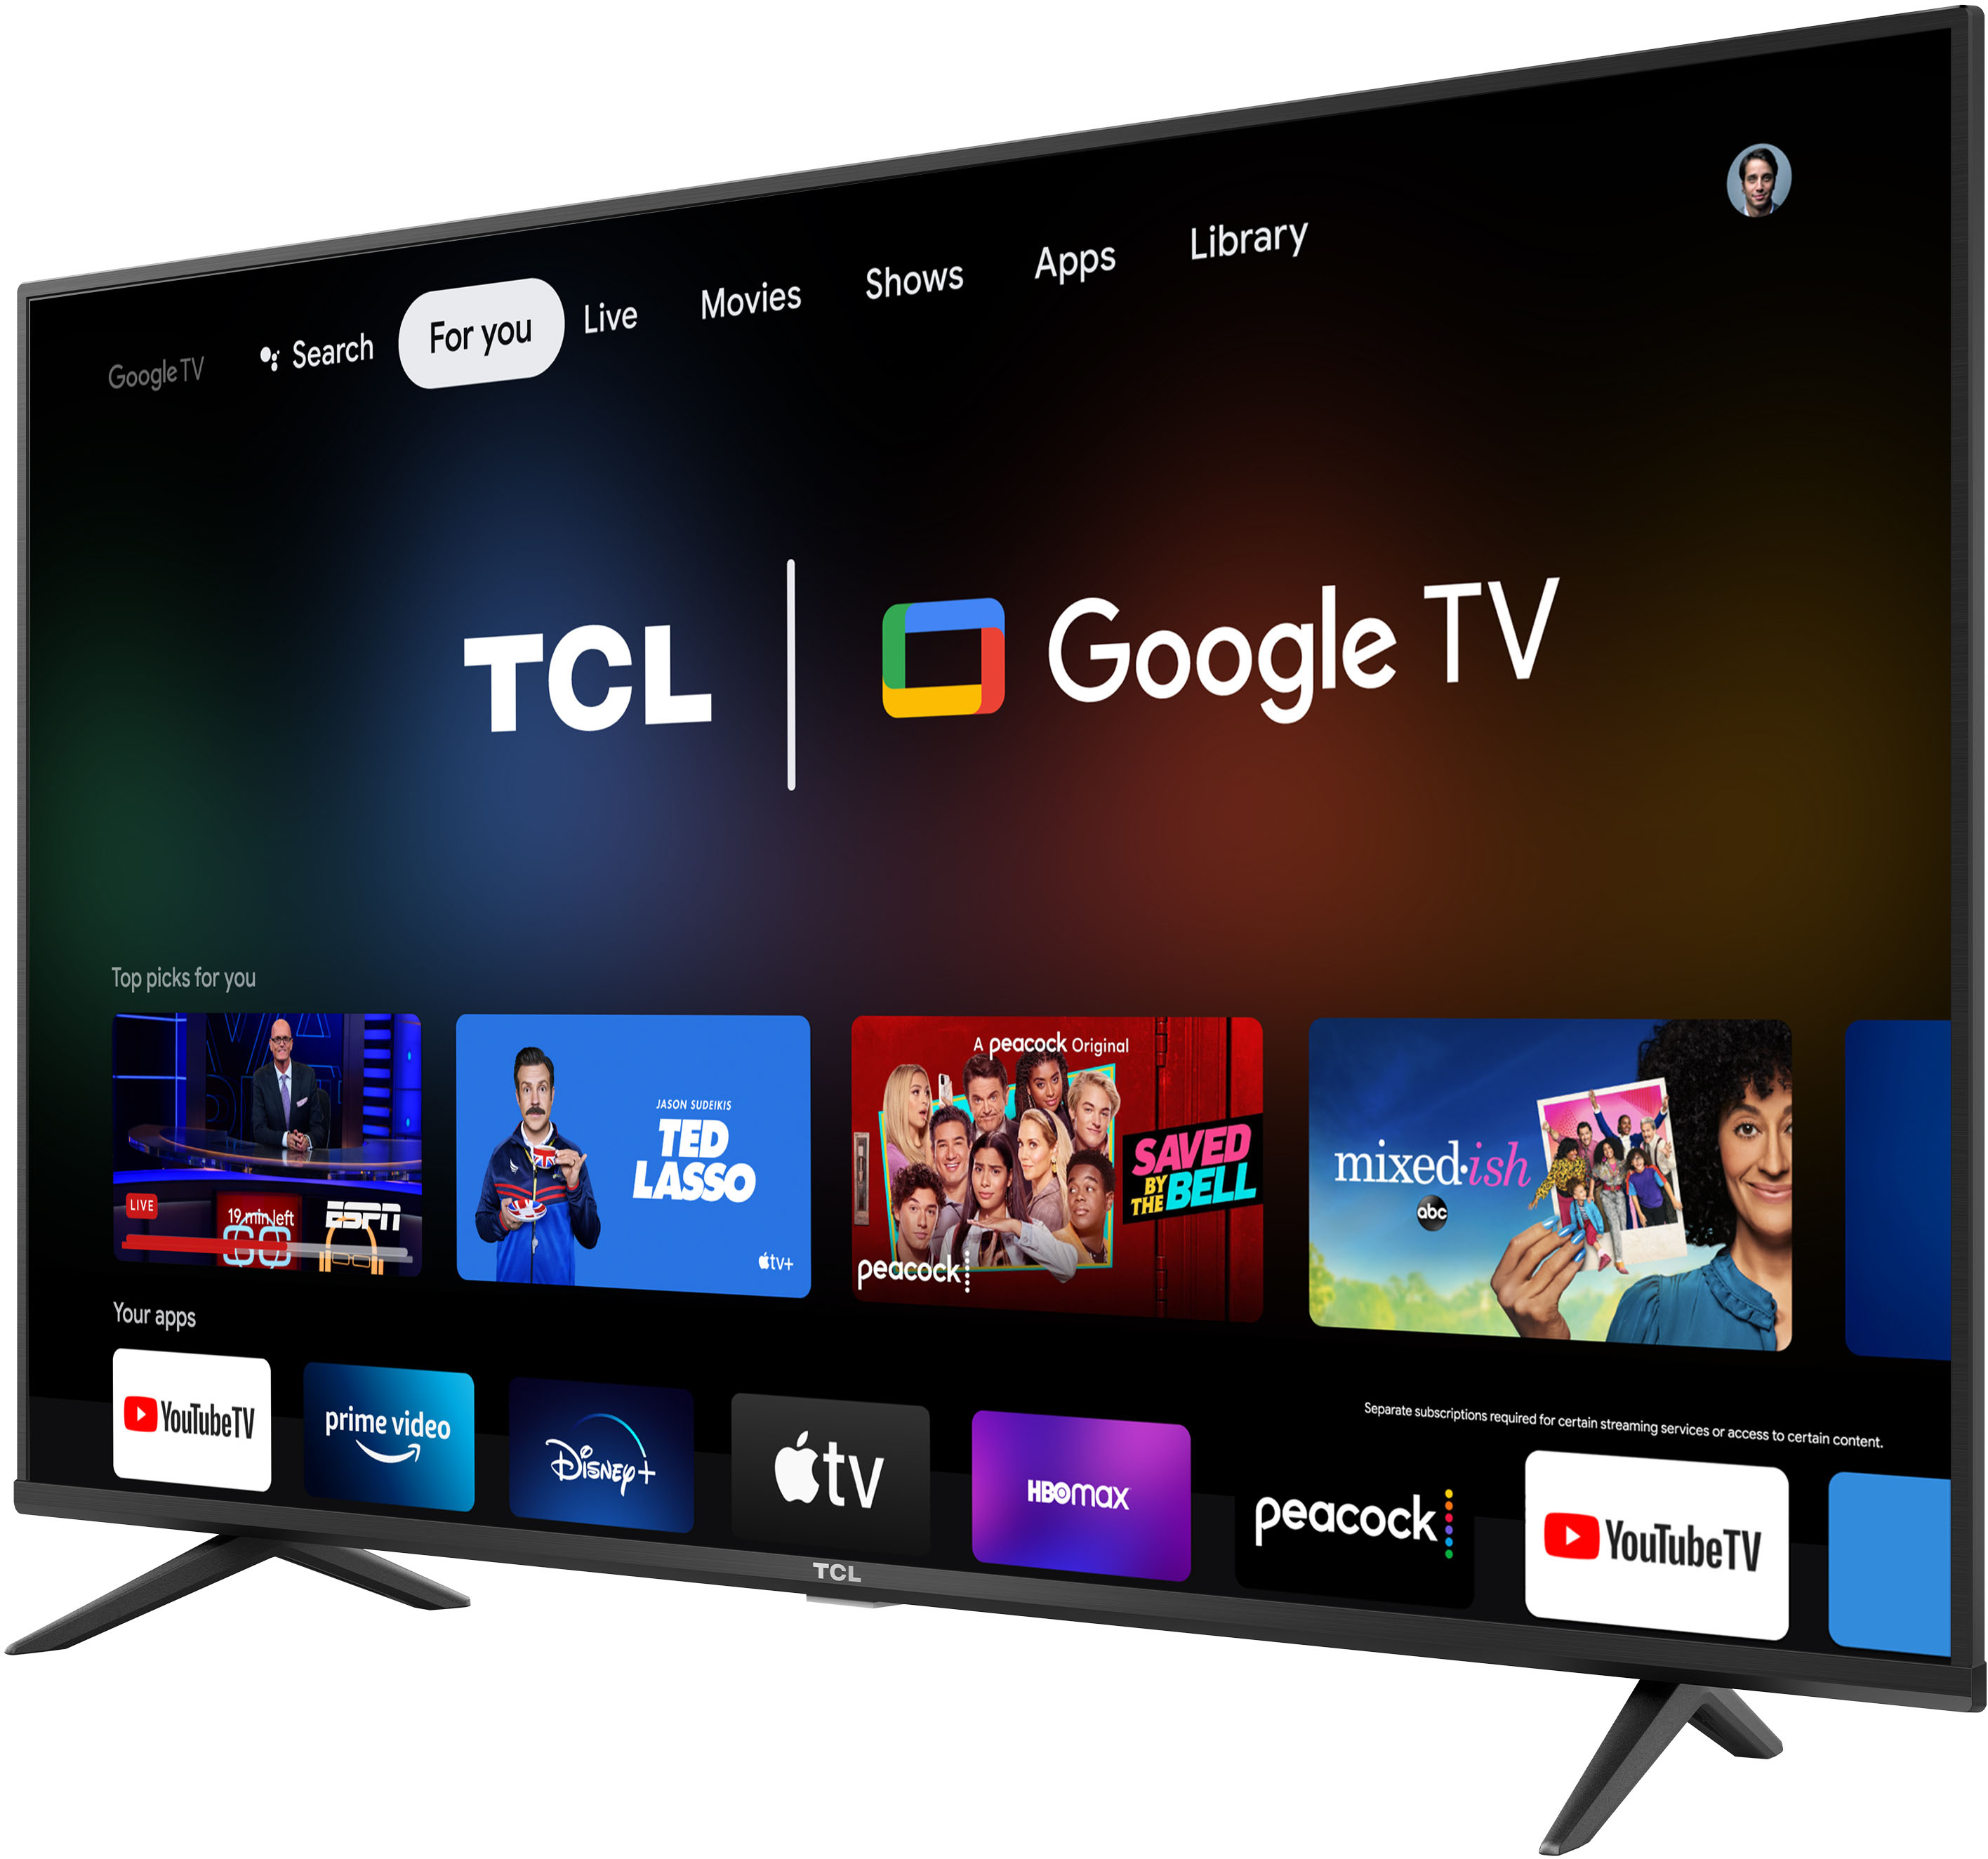 Pantalla TCL 40 Pulgadas LED Full HD Android TV a precio de socio